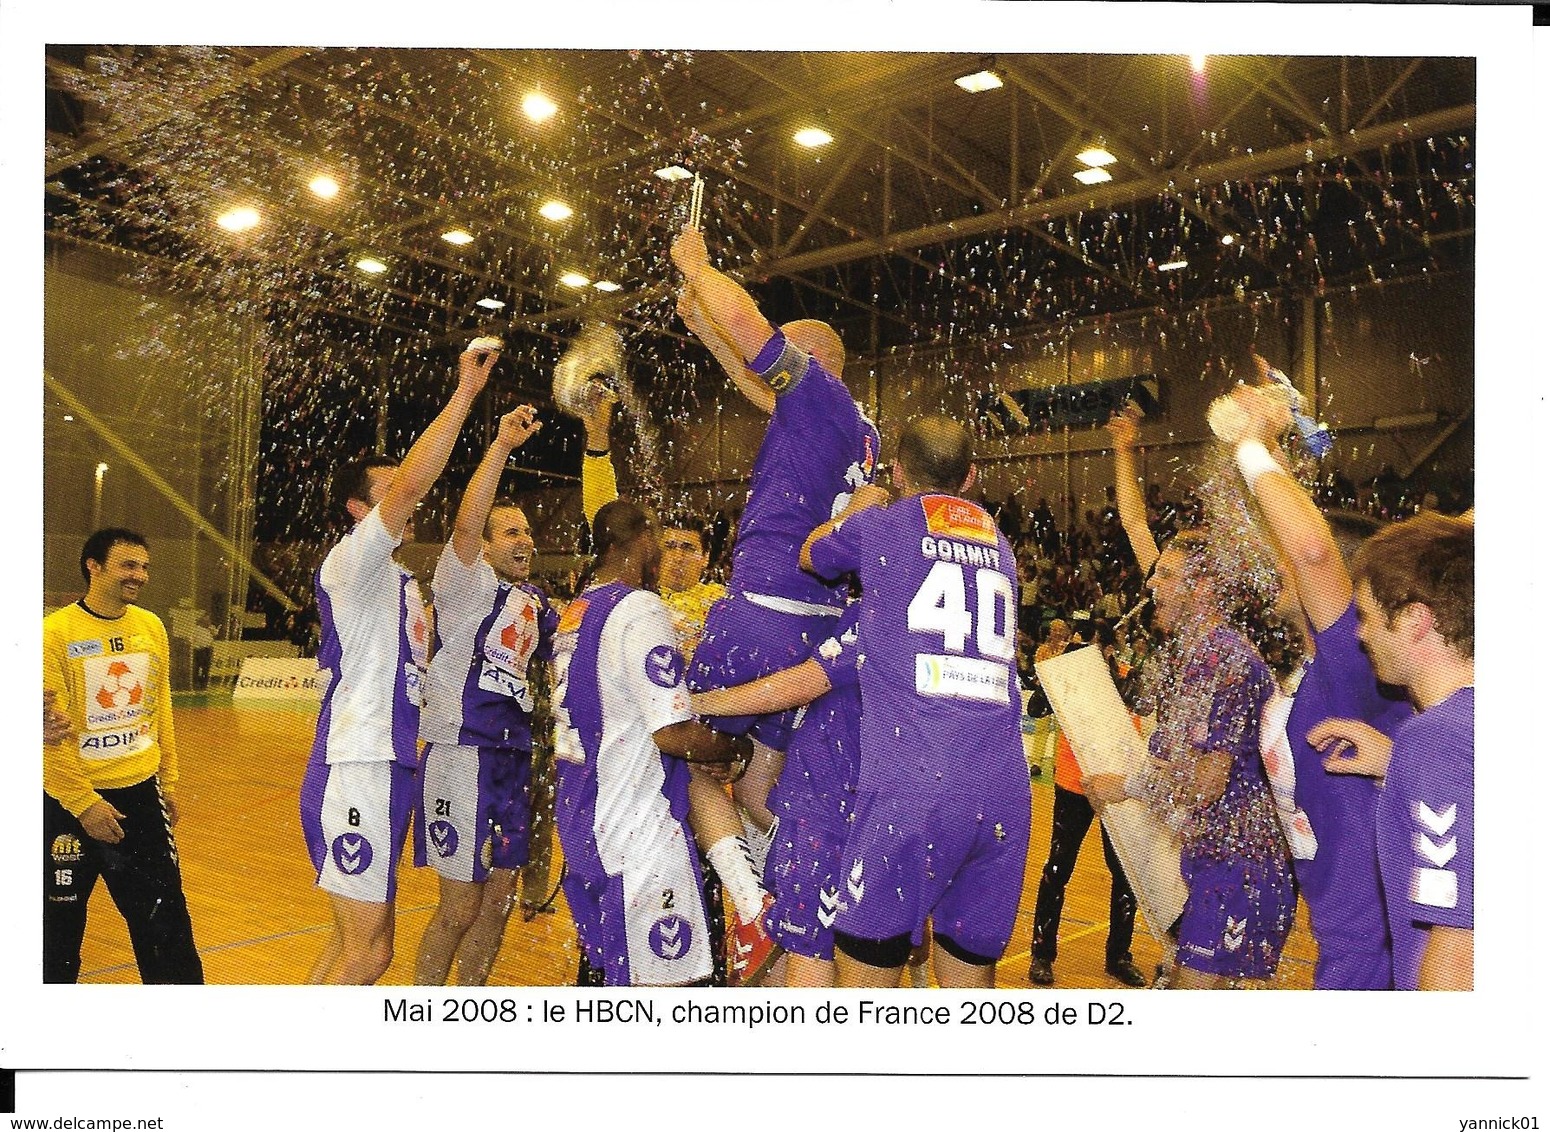 HANDBALL CLUB NANTES - CHAMPION FRANCE 2008 D2 - Handball